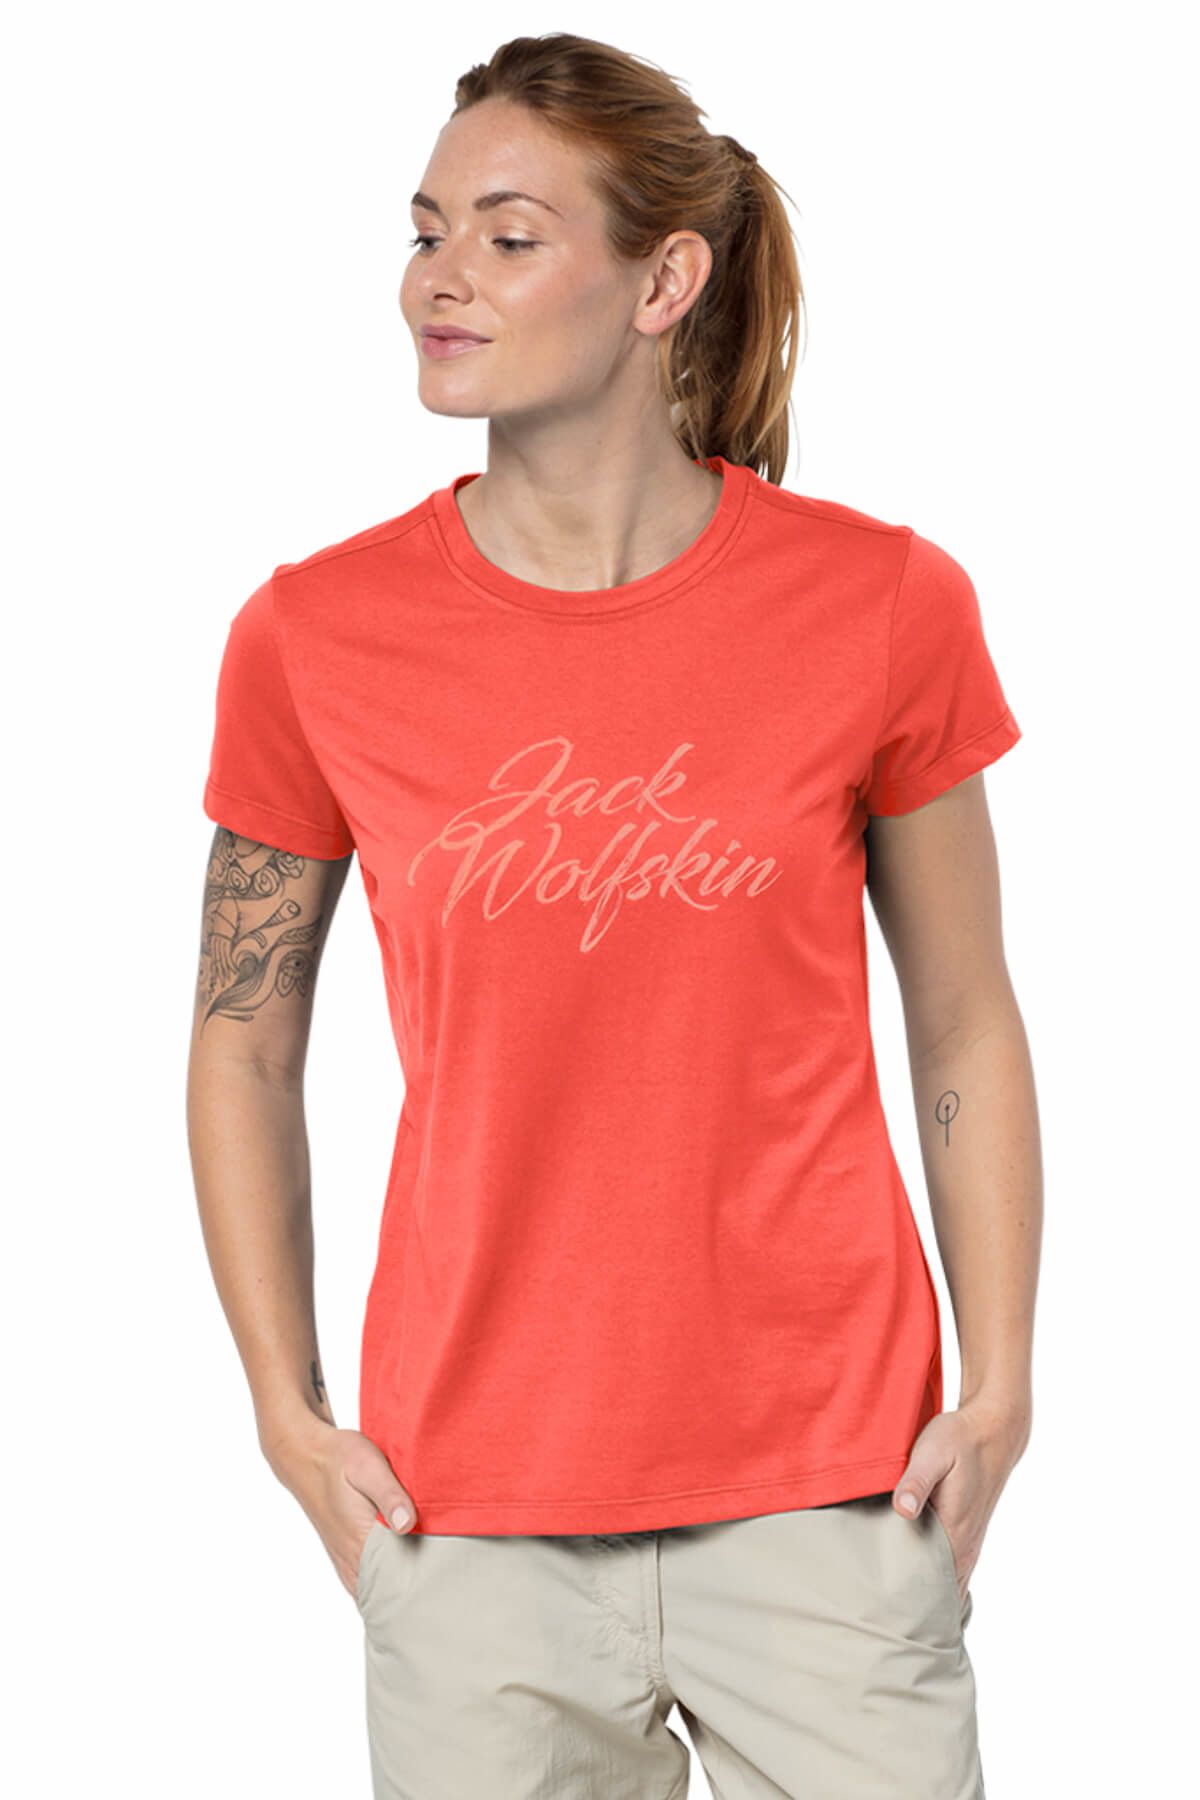 Jack Wolfskin Kadin Brand T-Shirt 1806061